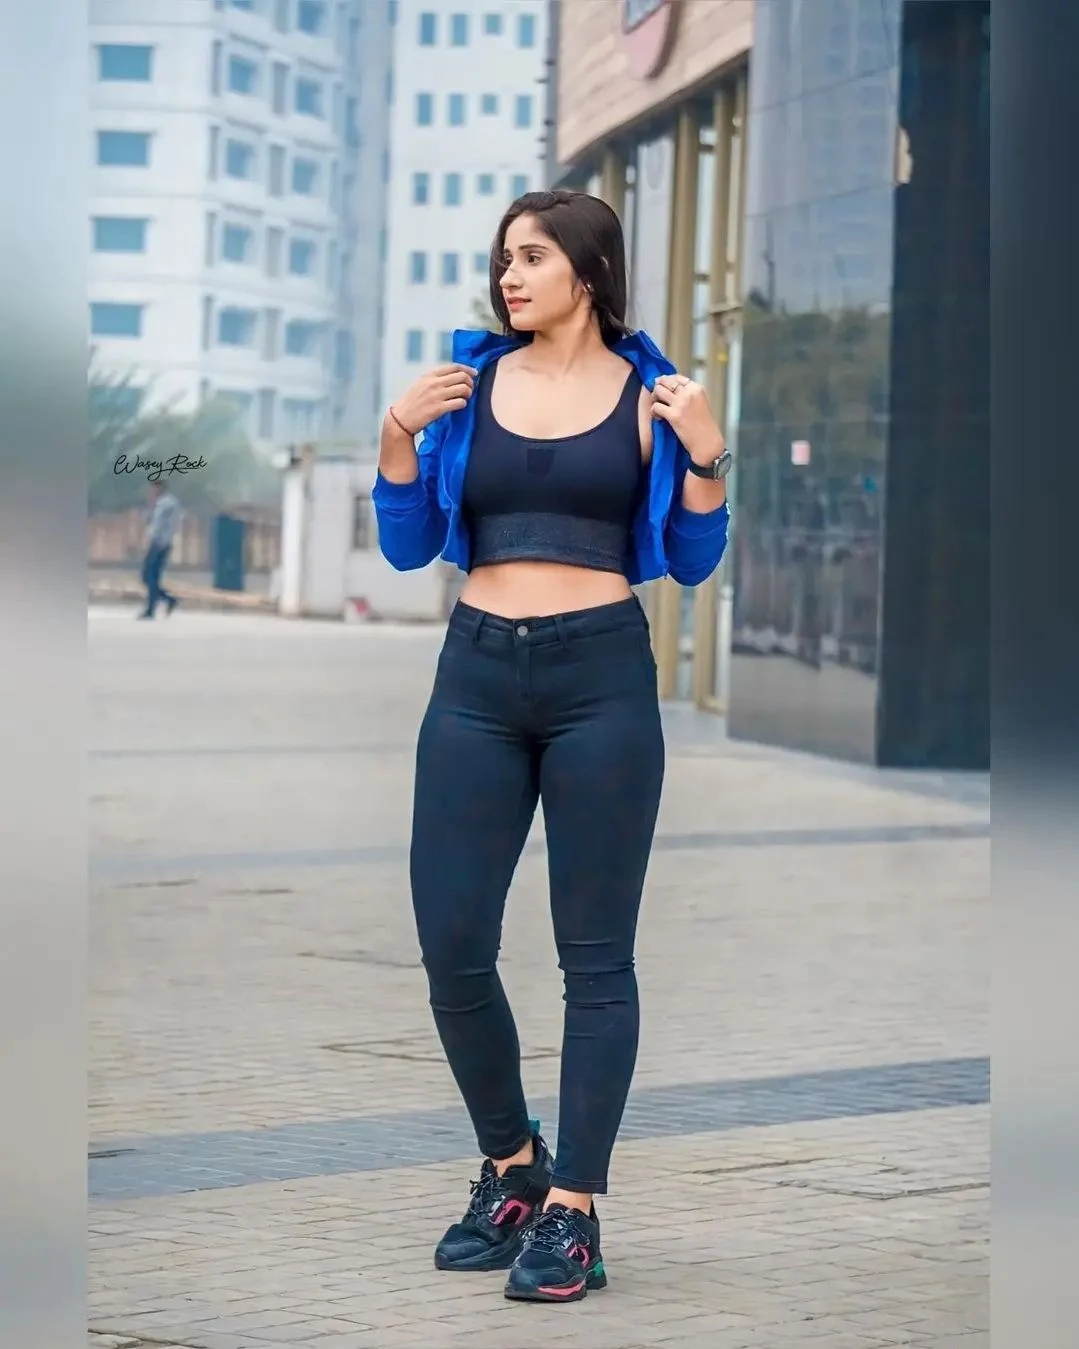 Priyanka Drall hot and sexy Thighs and Butt | Fitness Model Priyanka Drall hot Gym Workout